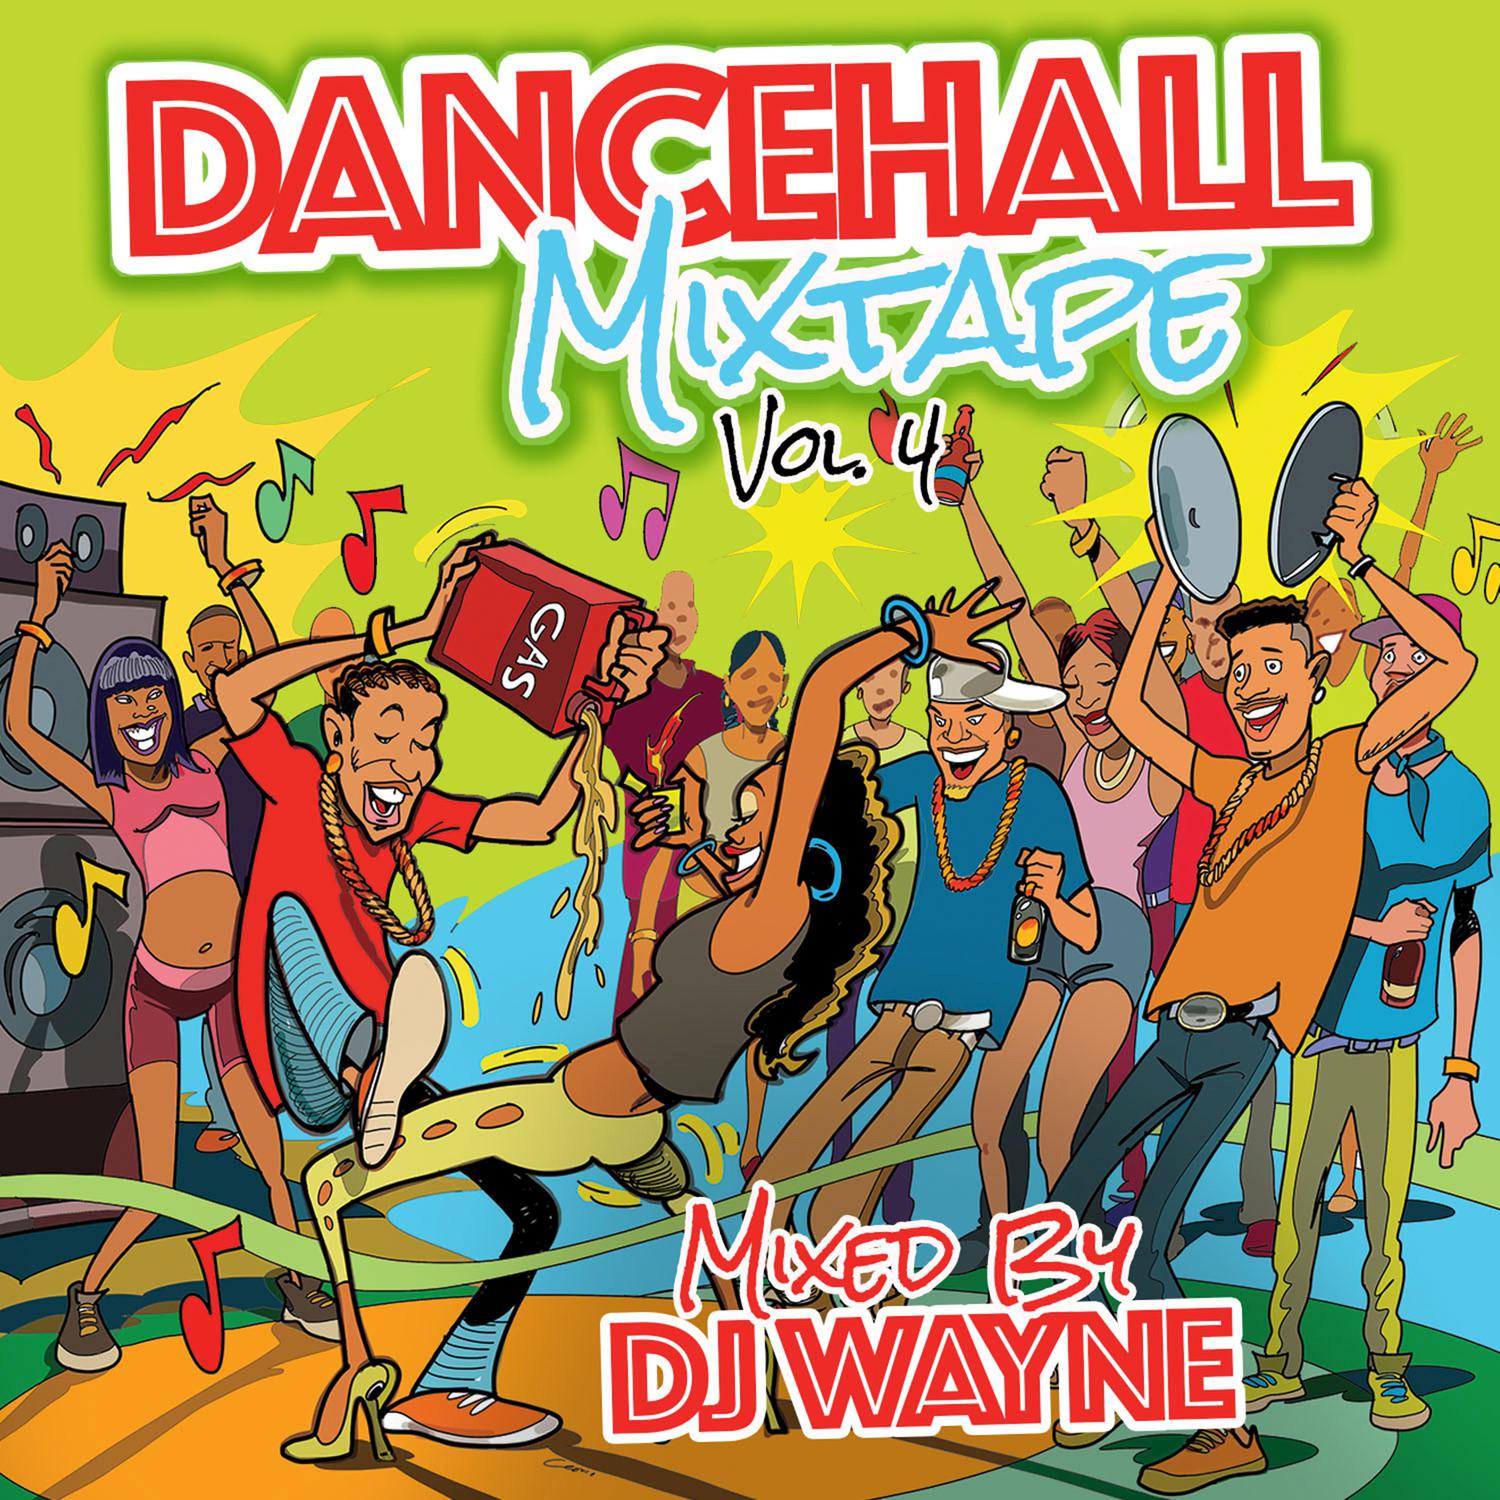 Jah is My Everything (DJ Wayne Mix)